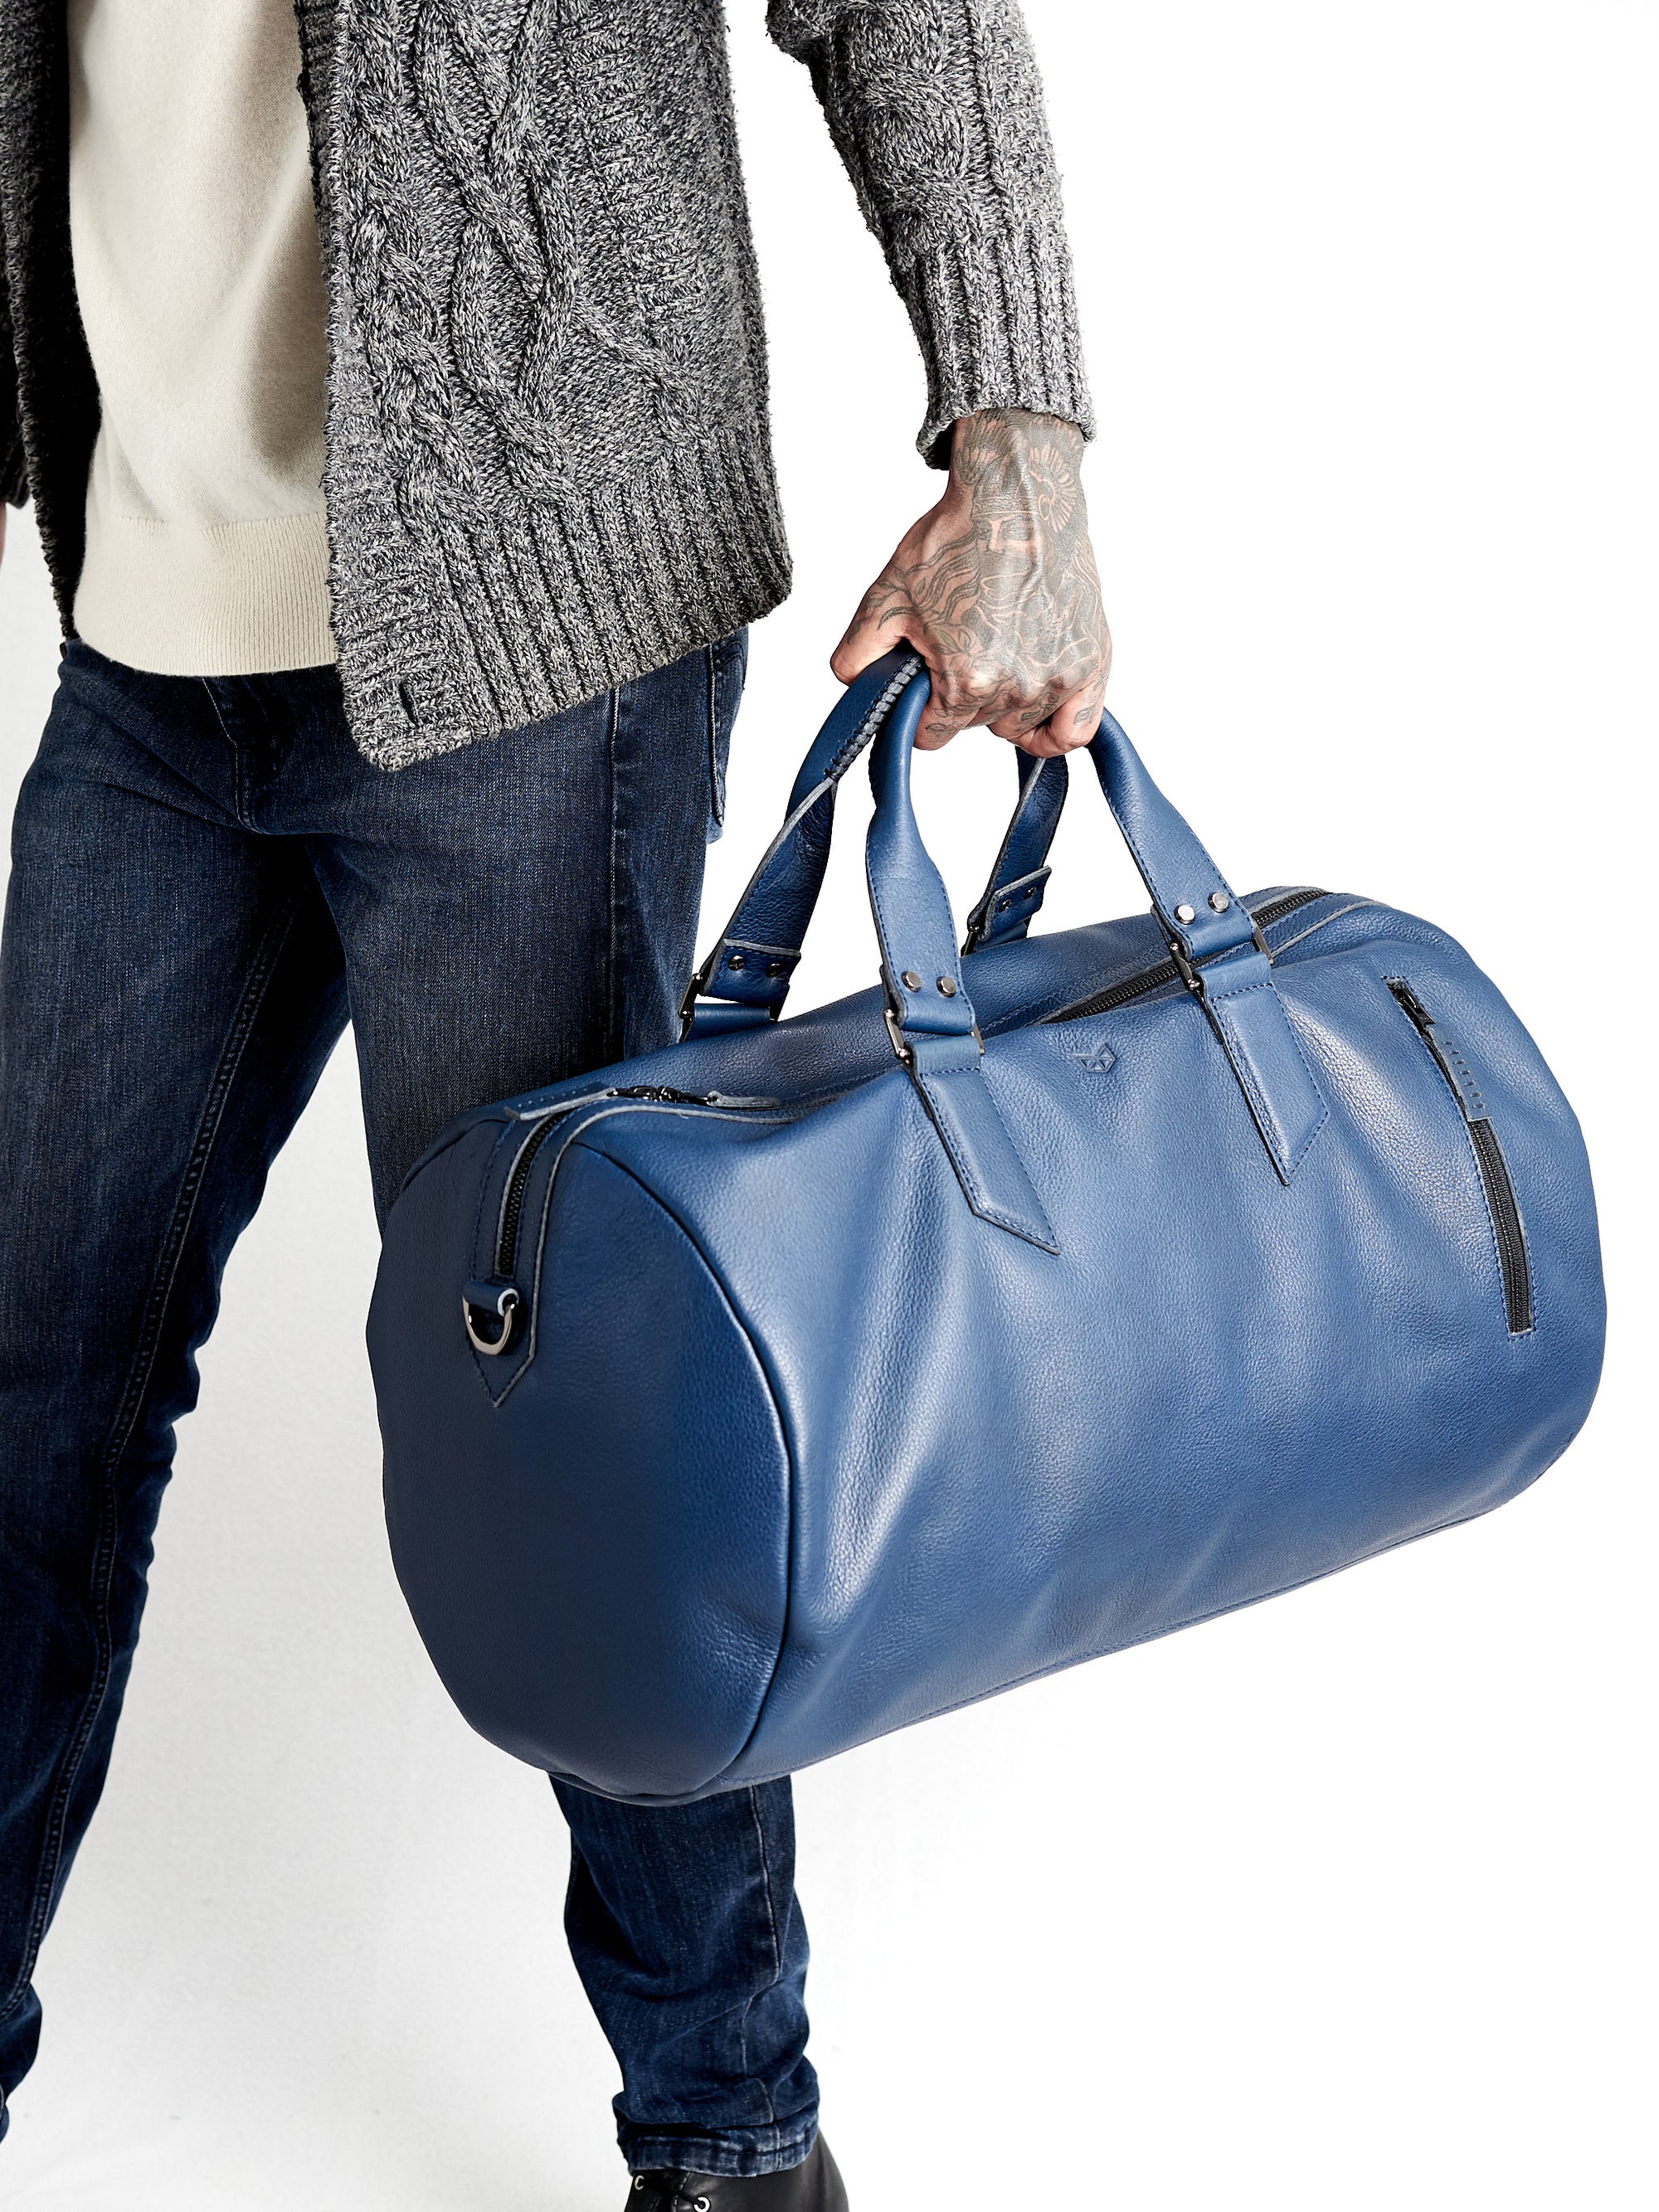 Travel weekender. Substantial Duffle Bag Navy by Capra Leather